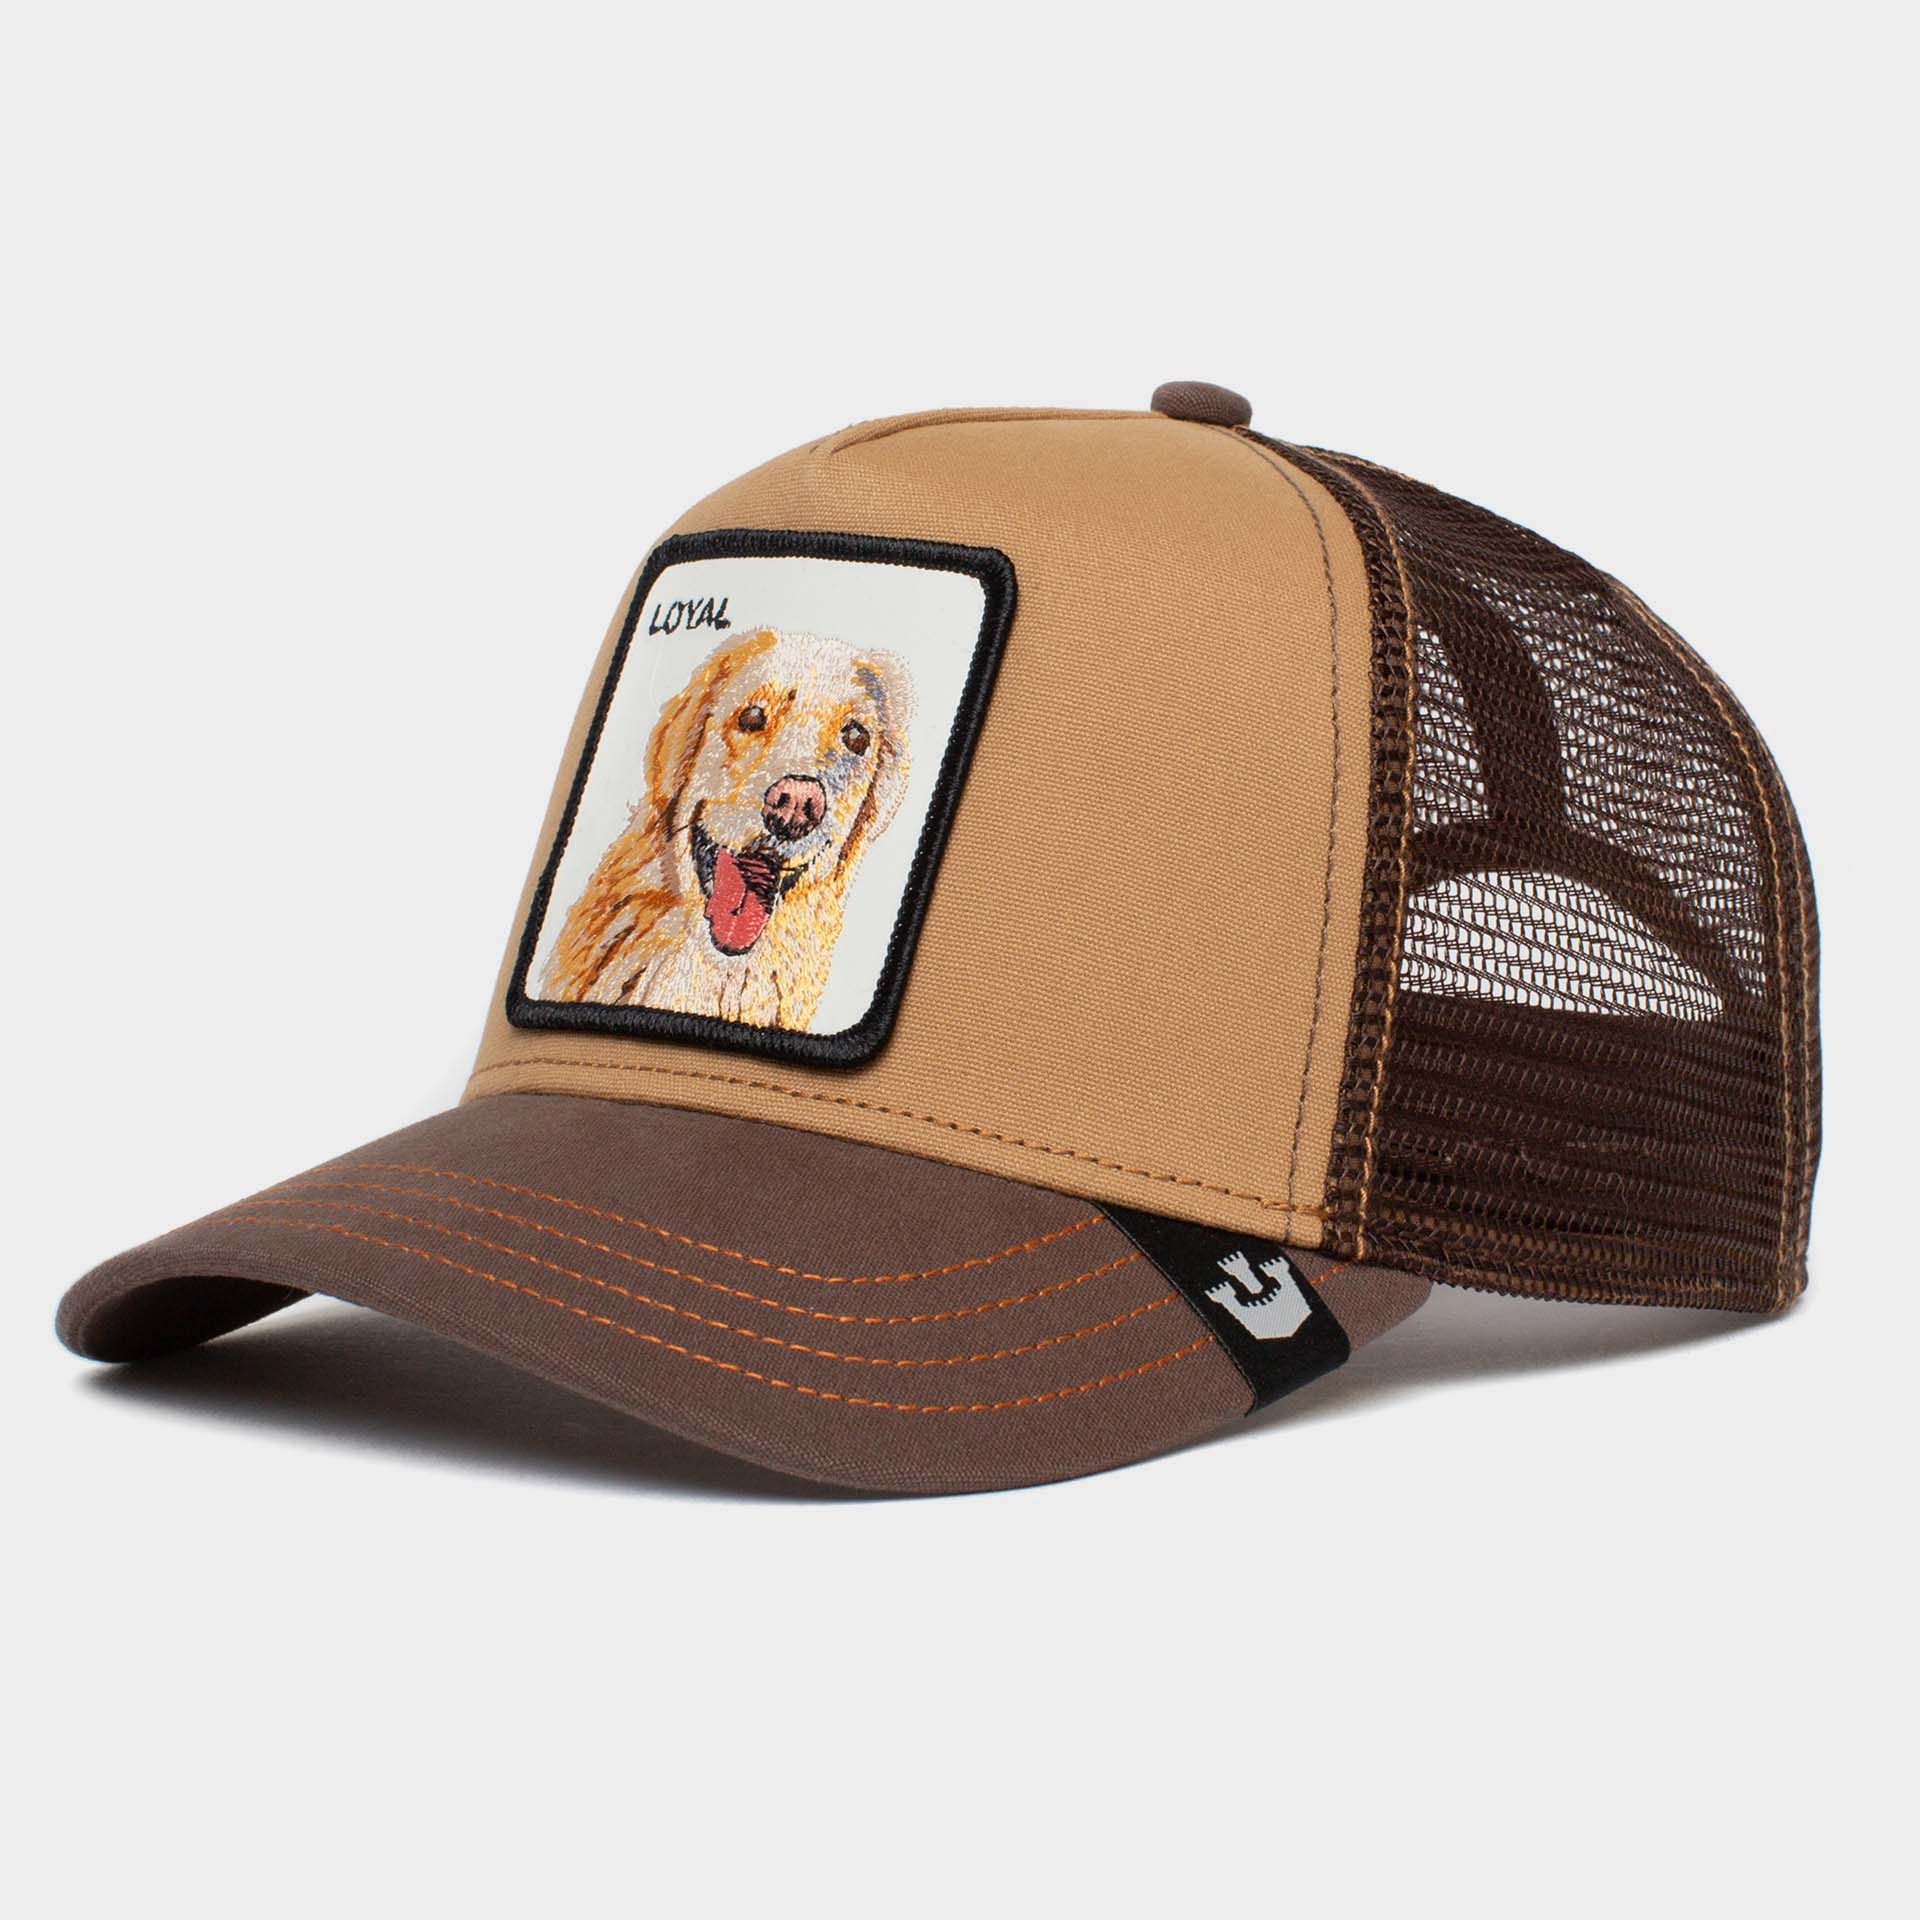 Goorin Bros The Loyal Dog Trucker Cap Brown